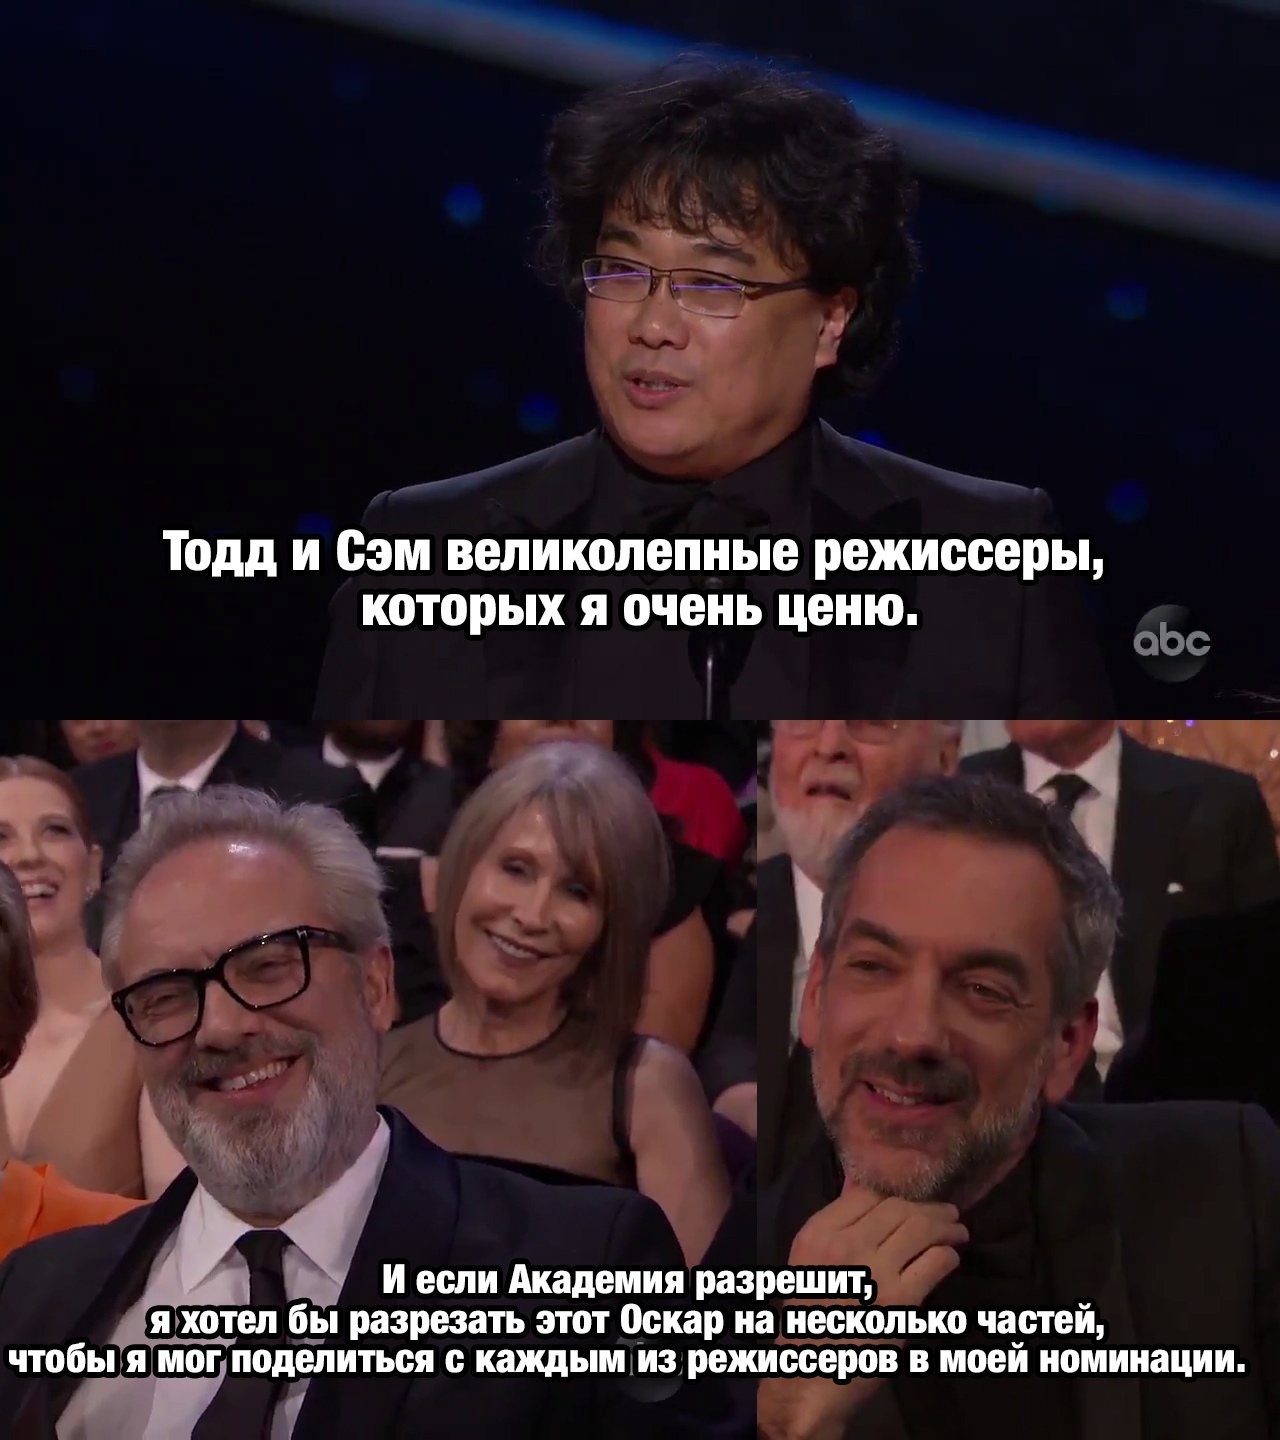 'Parasite' director Bong Joon-ho's speech at the 2020 Oscars Best Director award ceremony - Bong Joon-ho, Parasites, Oscar, Speech, Ceremony, Film Awards, 2020, Longpost, Storyboard